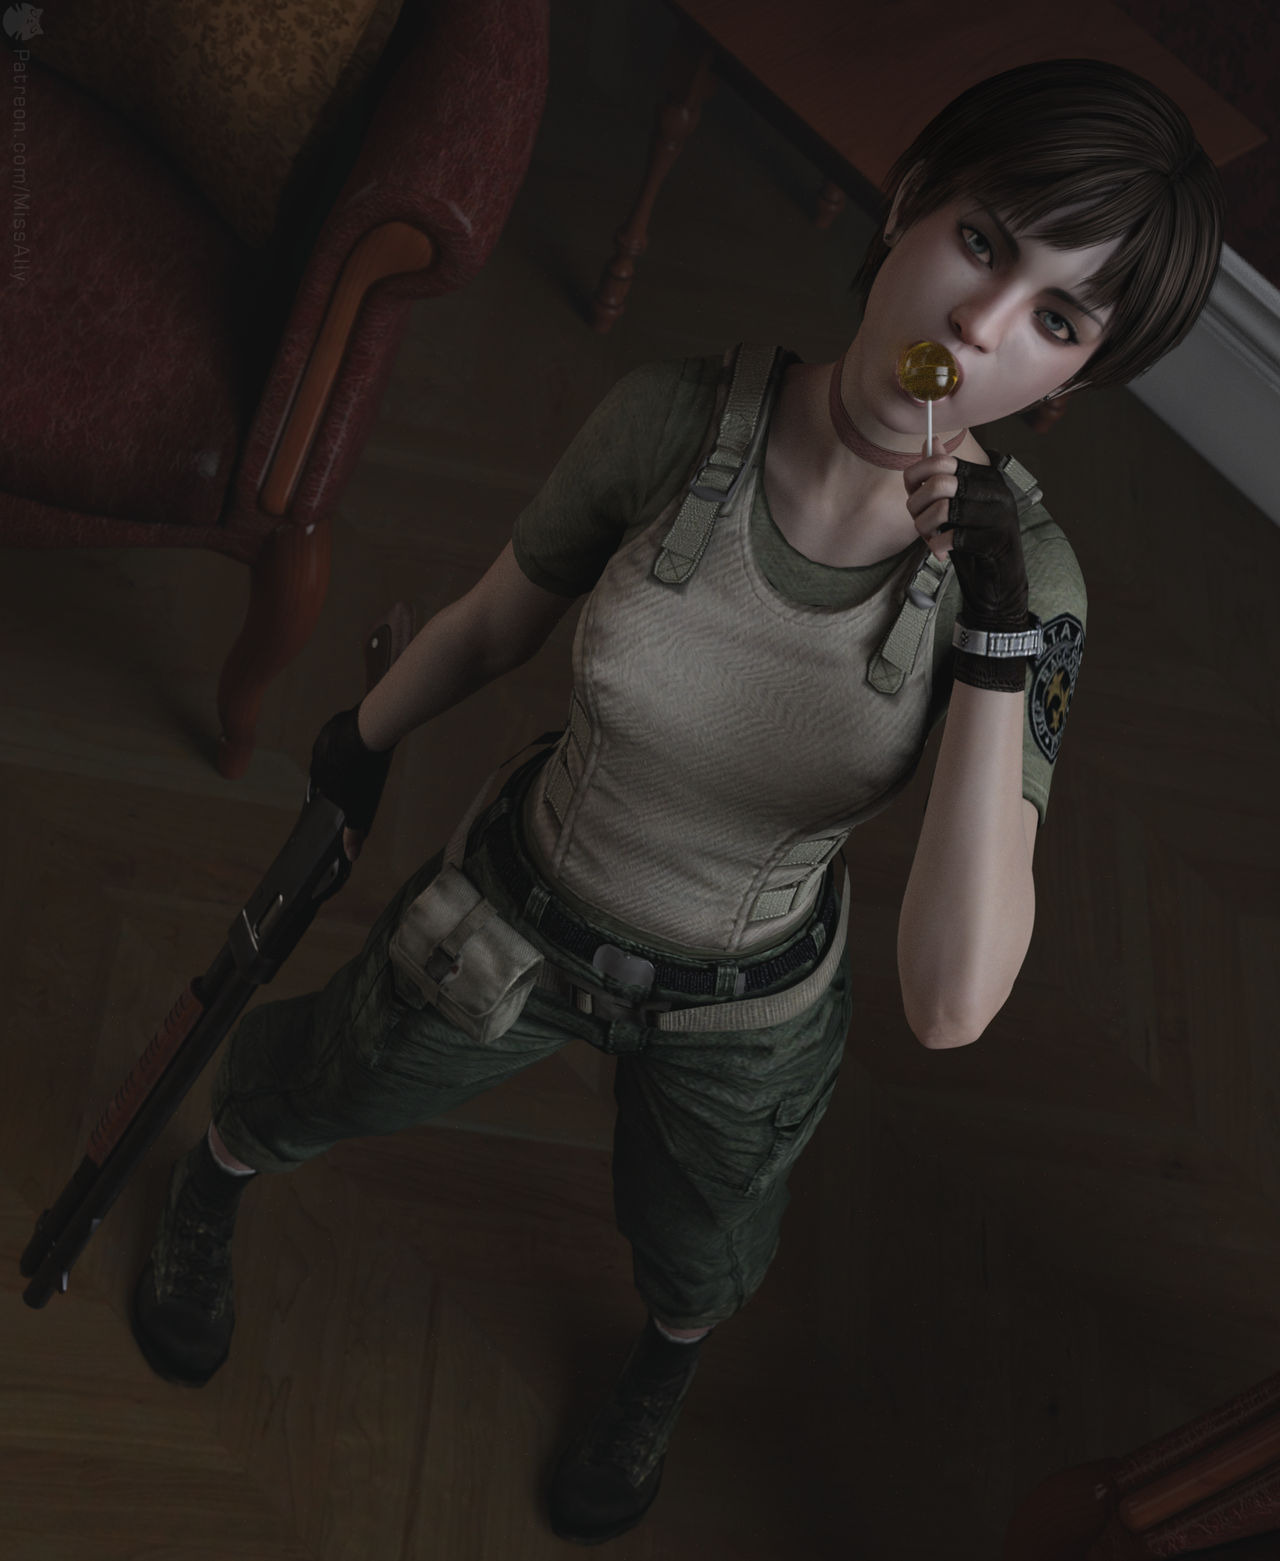 Rebecca Chambers Resident Evil By Alienally On Deviantart